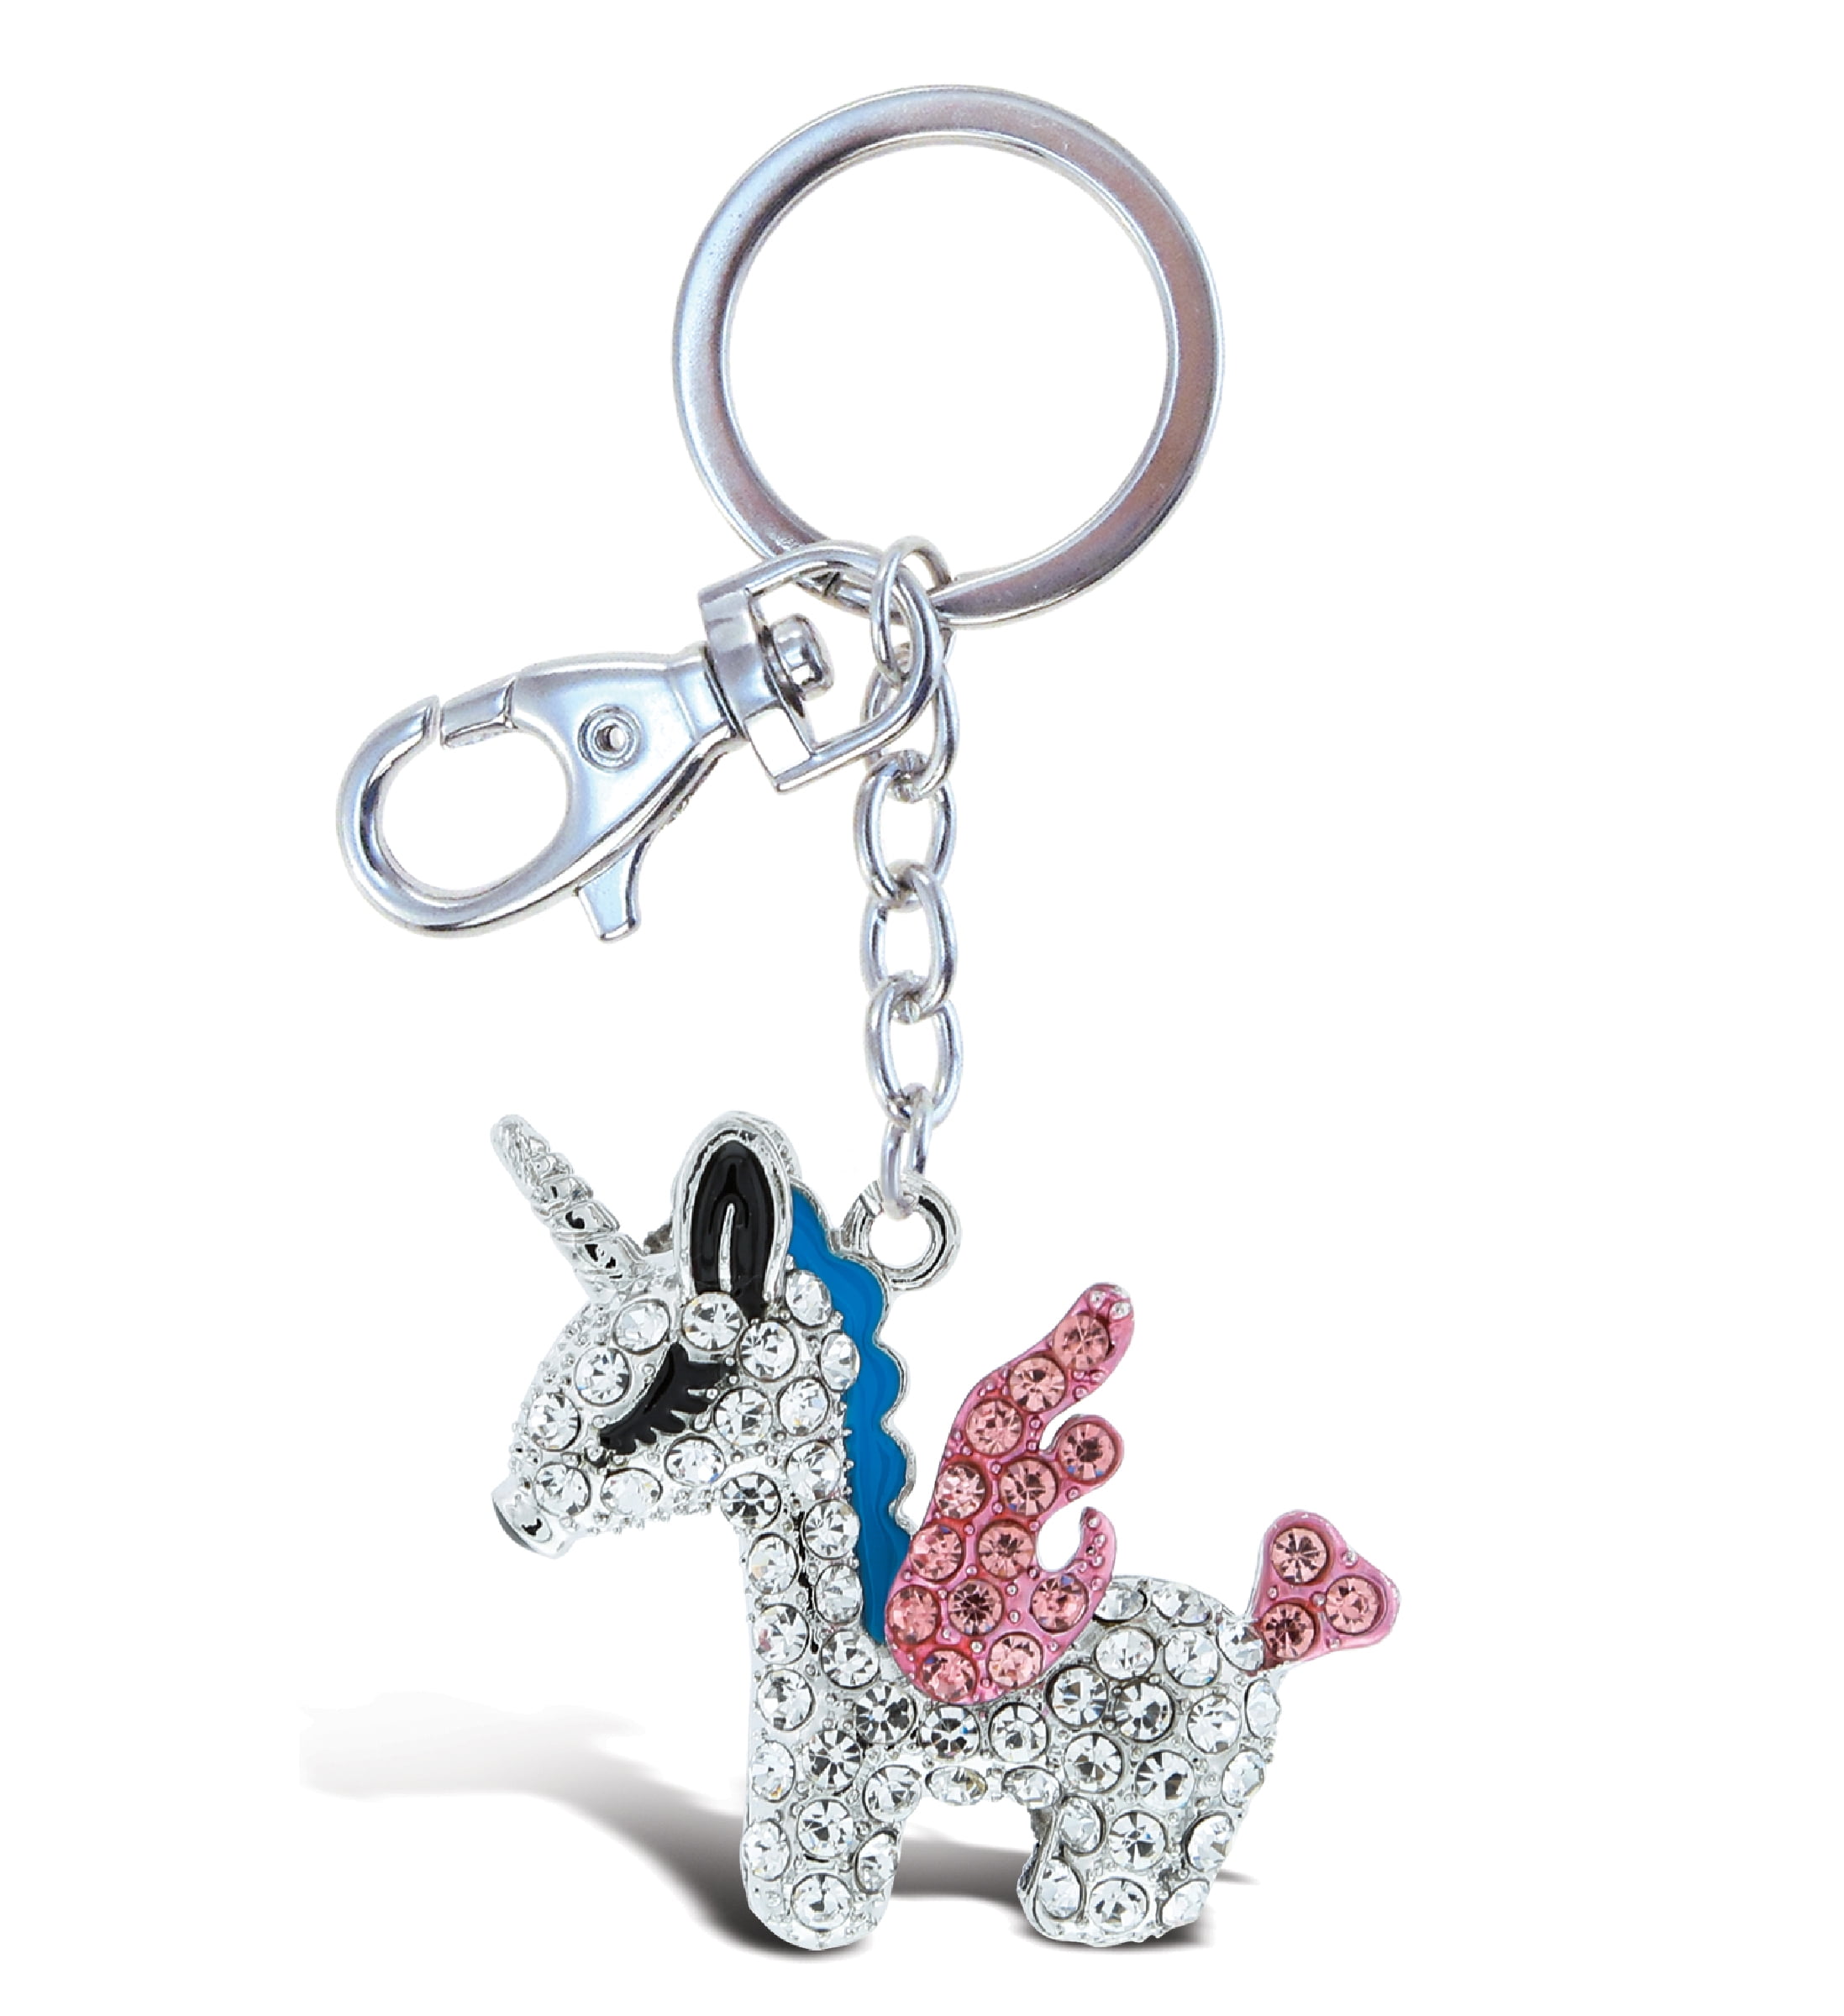 Crystal Rhinestone Unicorn Pendant Car Keyring Bag Keychain Key Ring Chain Gift 